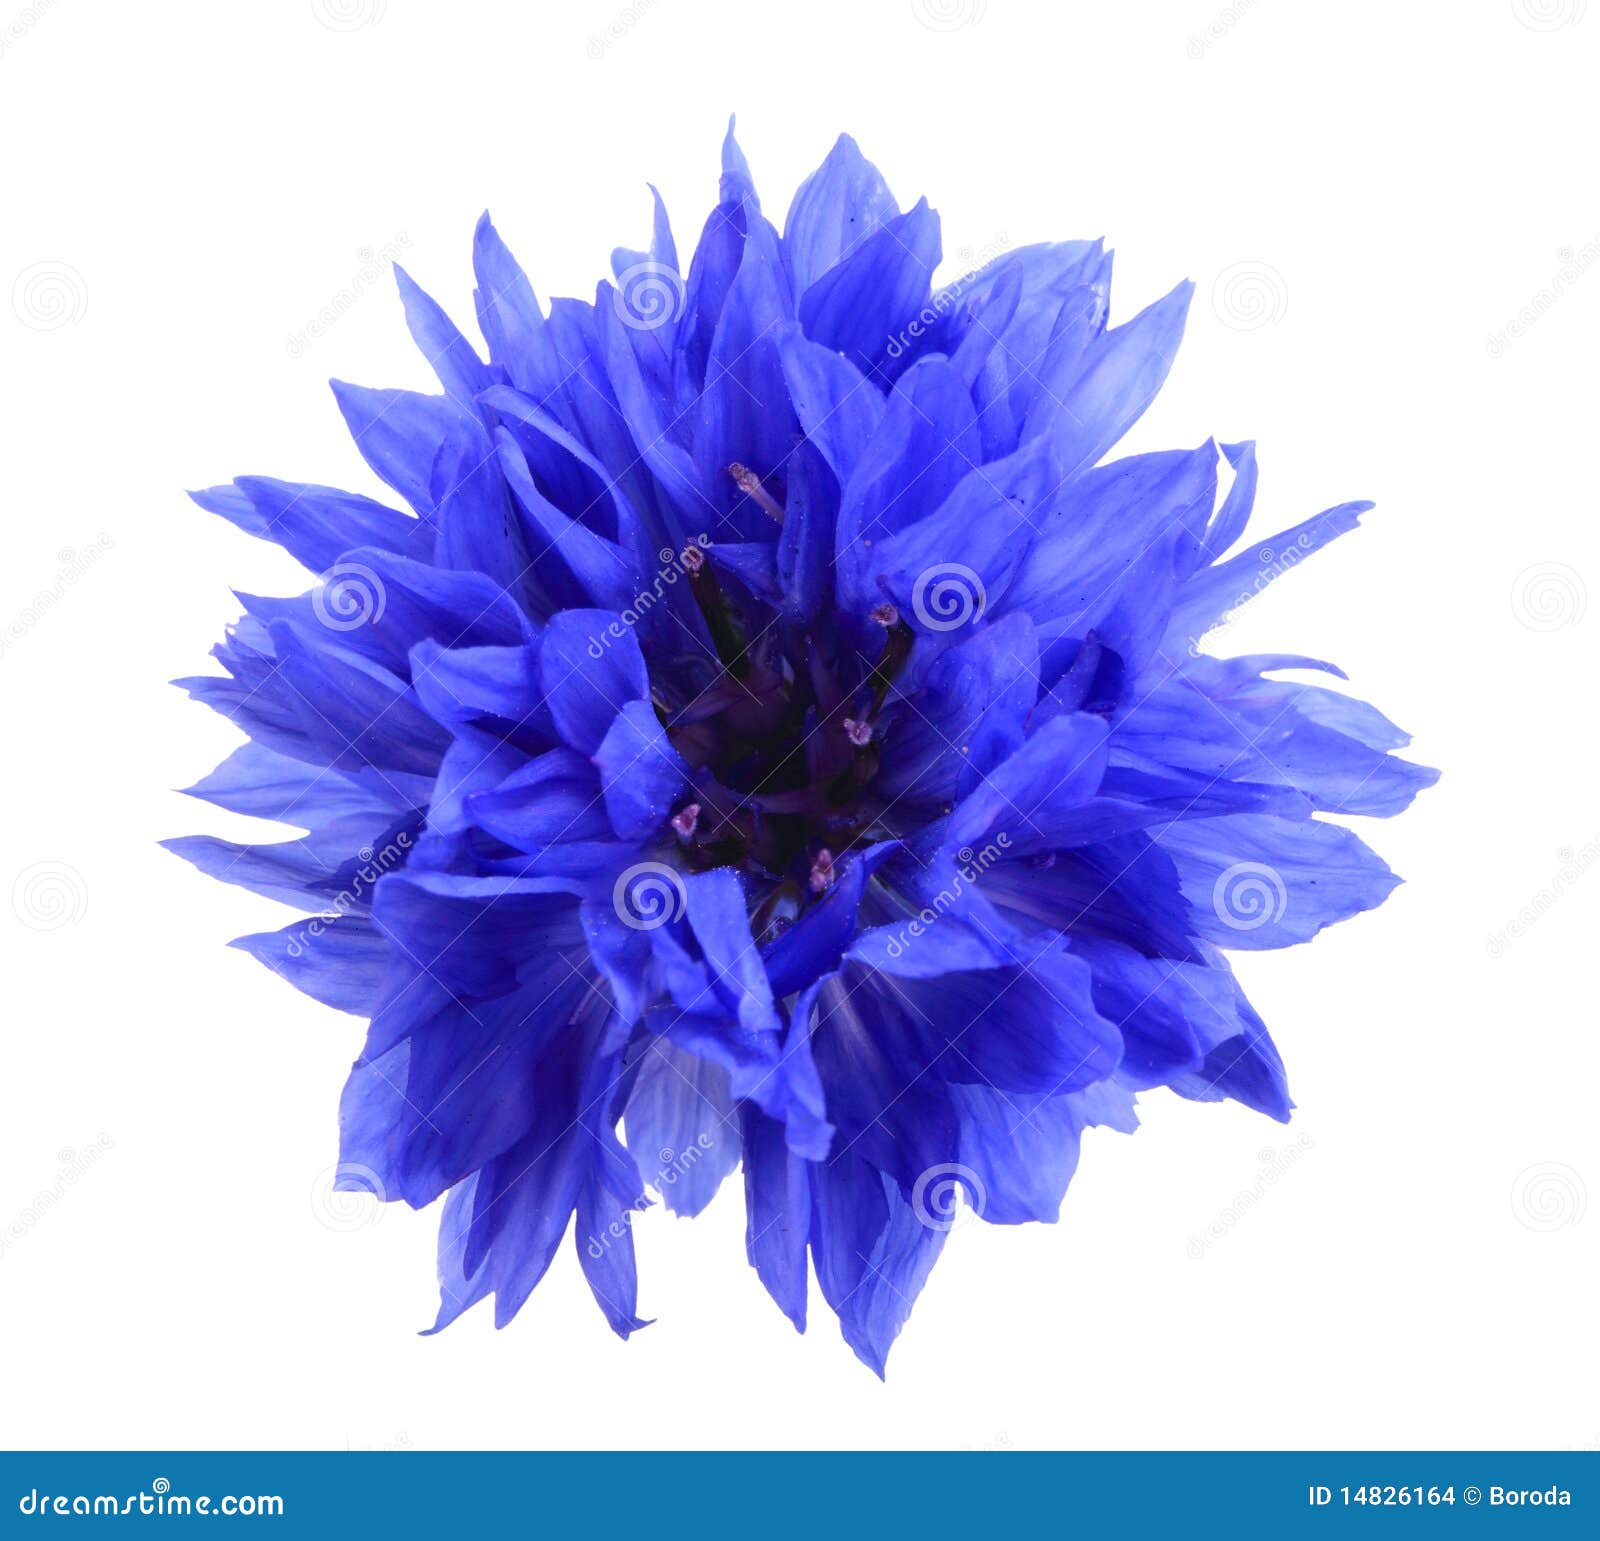 Breathtaking Compilation of Over 999 Blue Flower Images in Full 4K